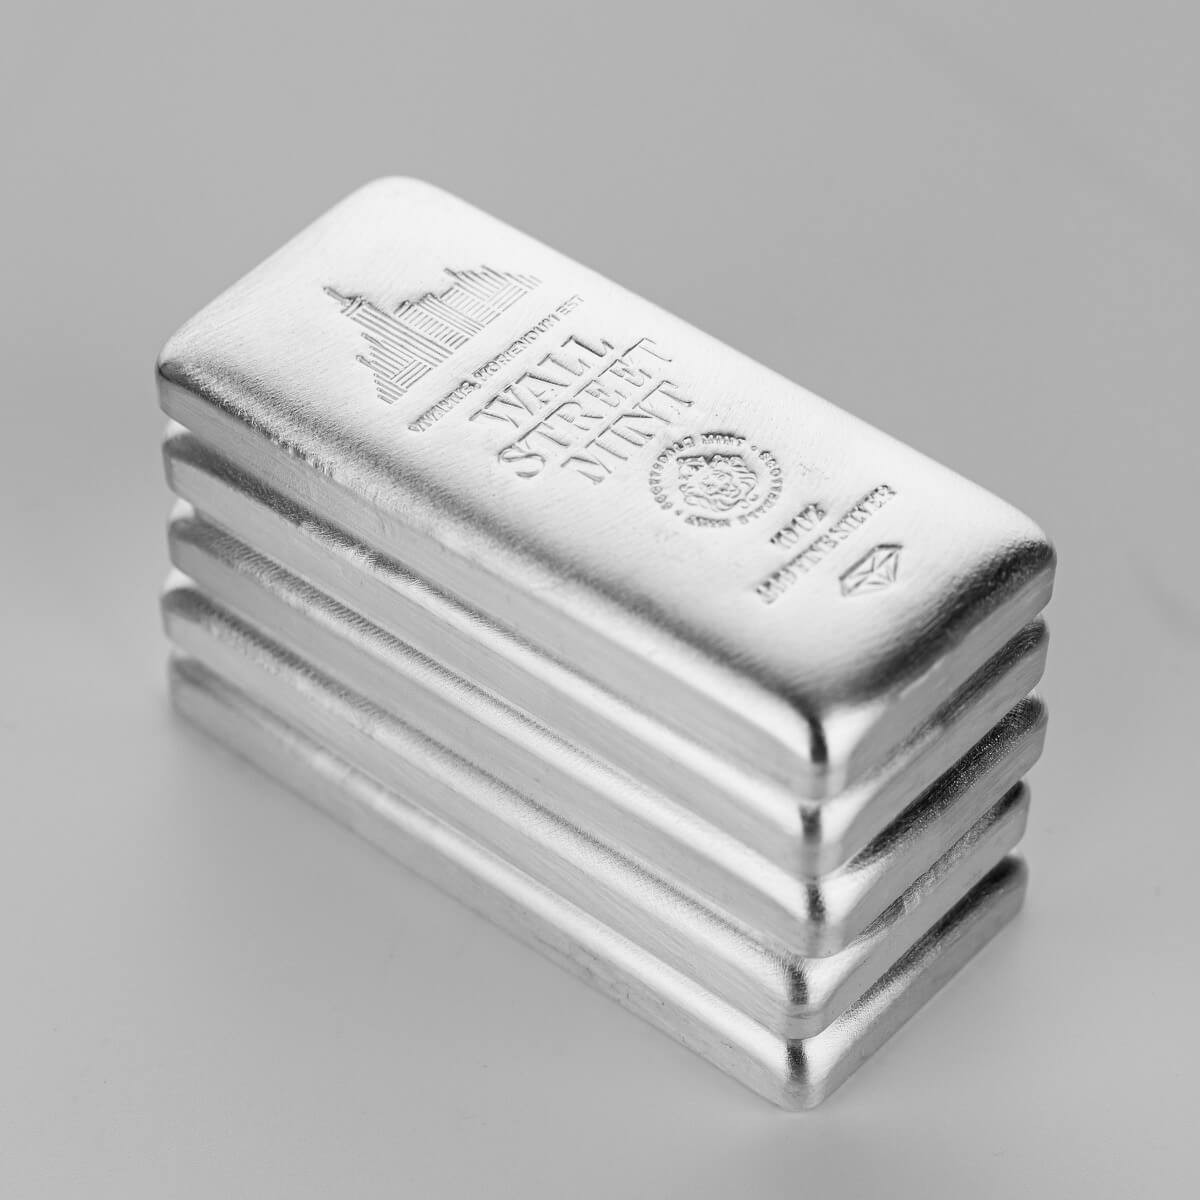 Wall Street Mint Silver 10 Oz Silver Bar